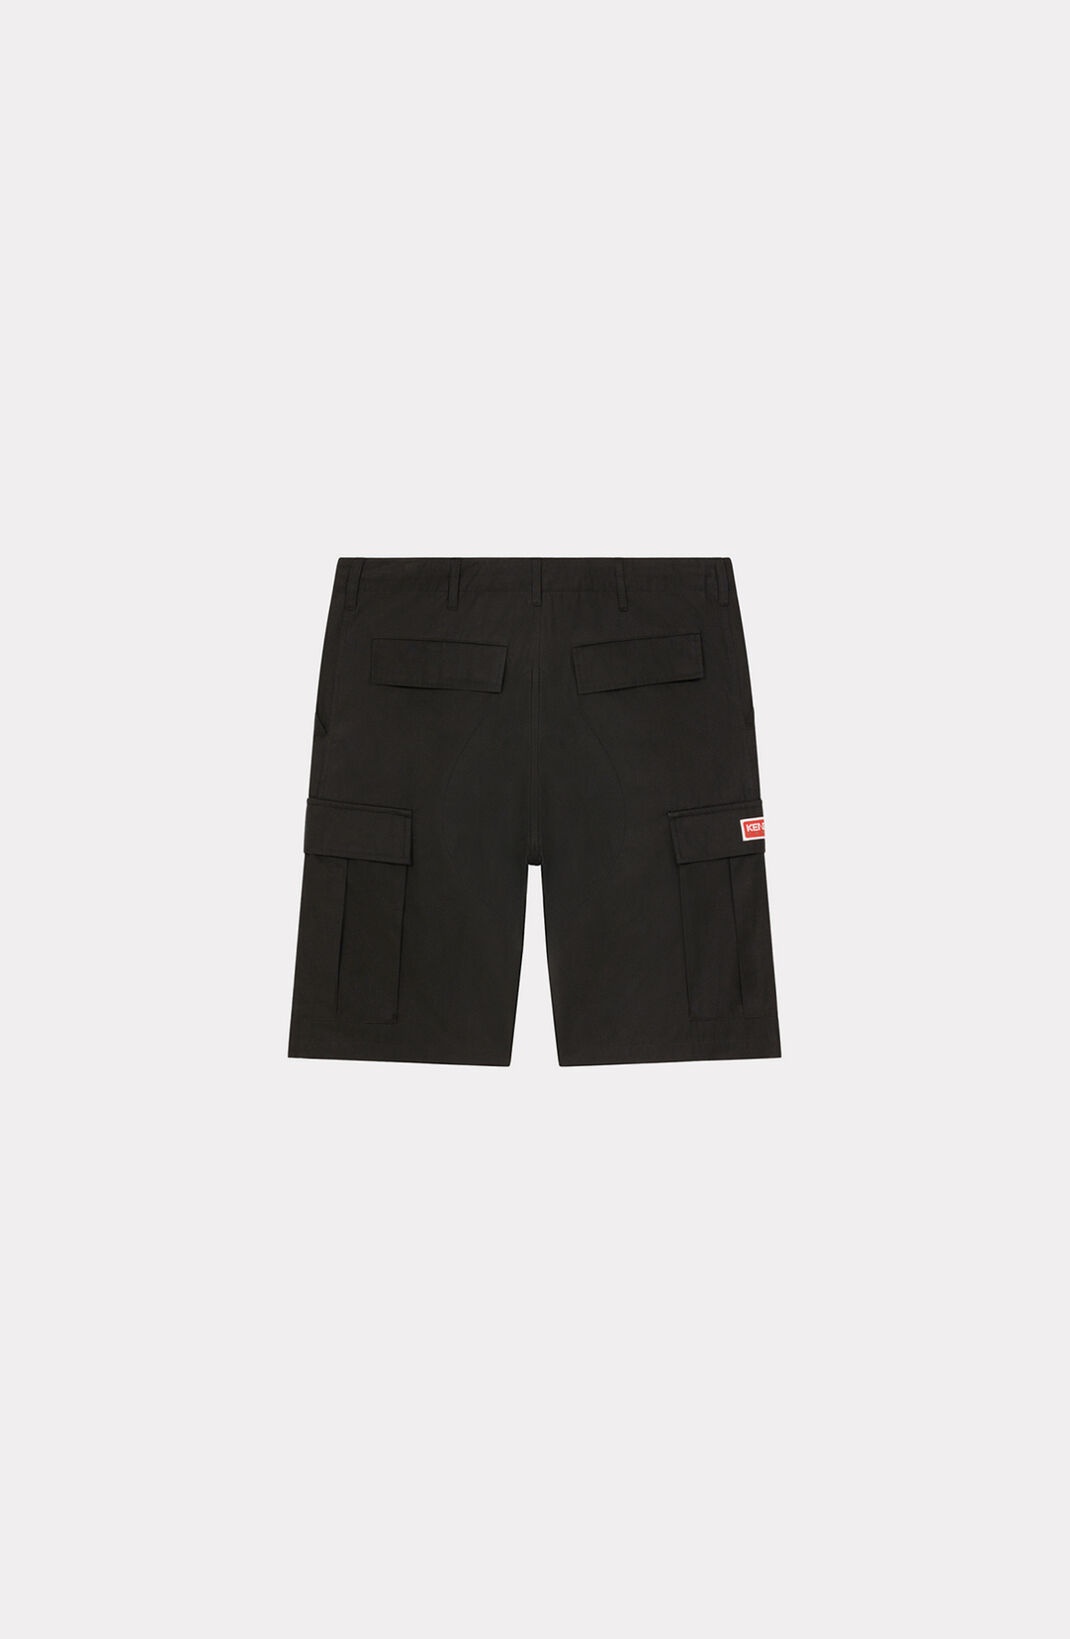 Cargo shorts - 2